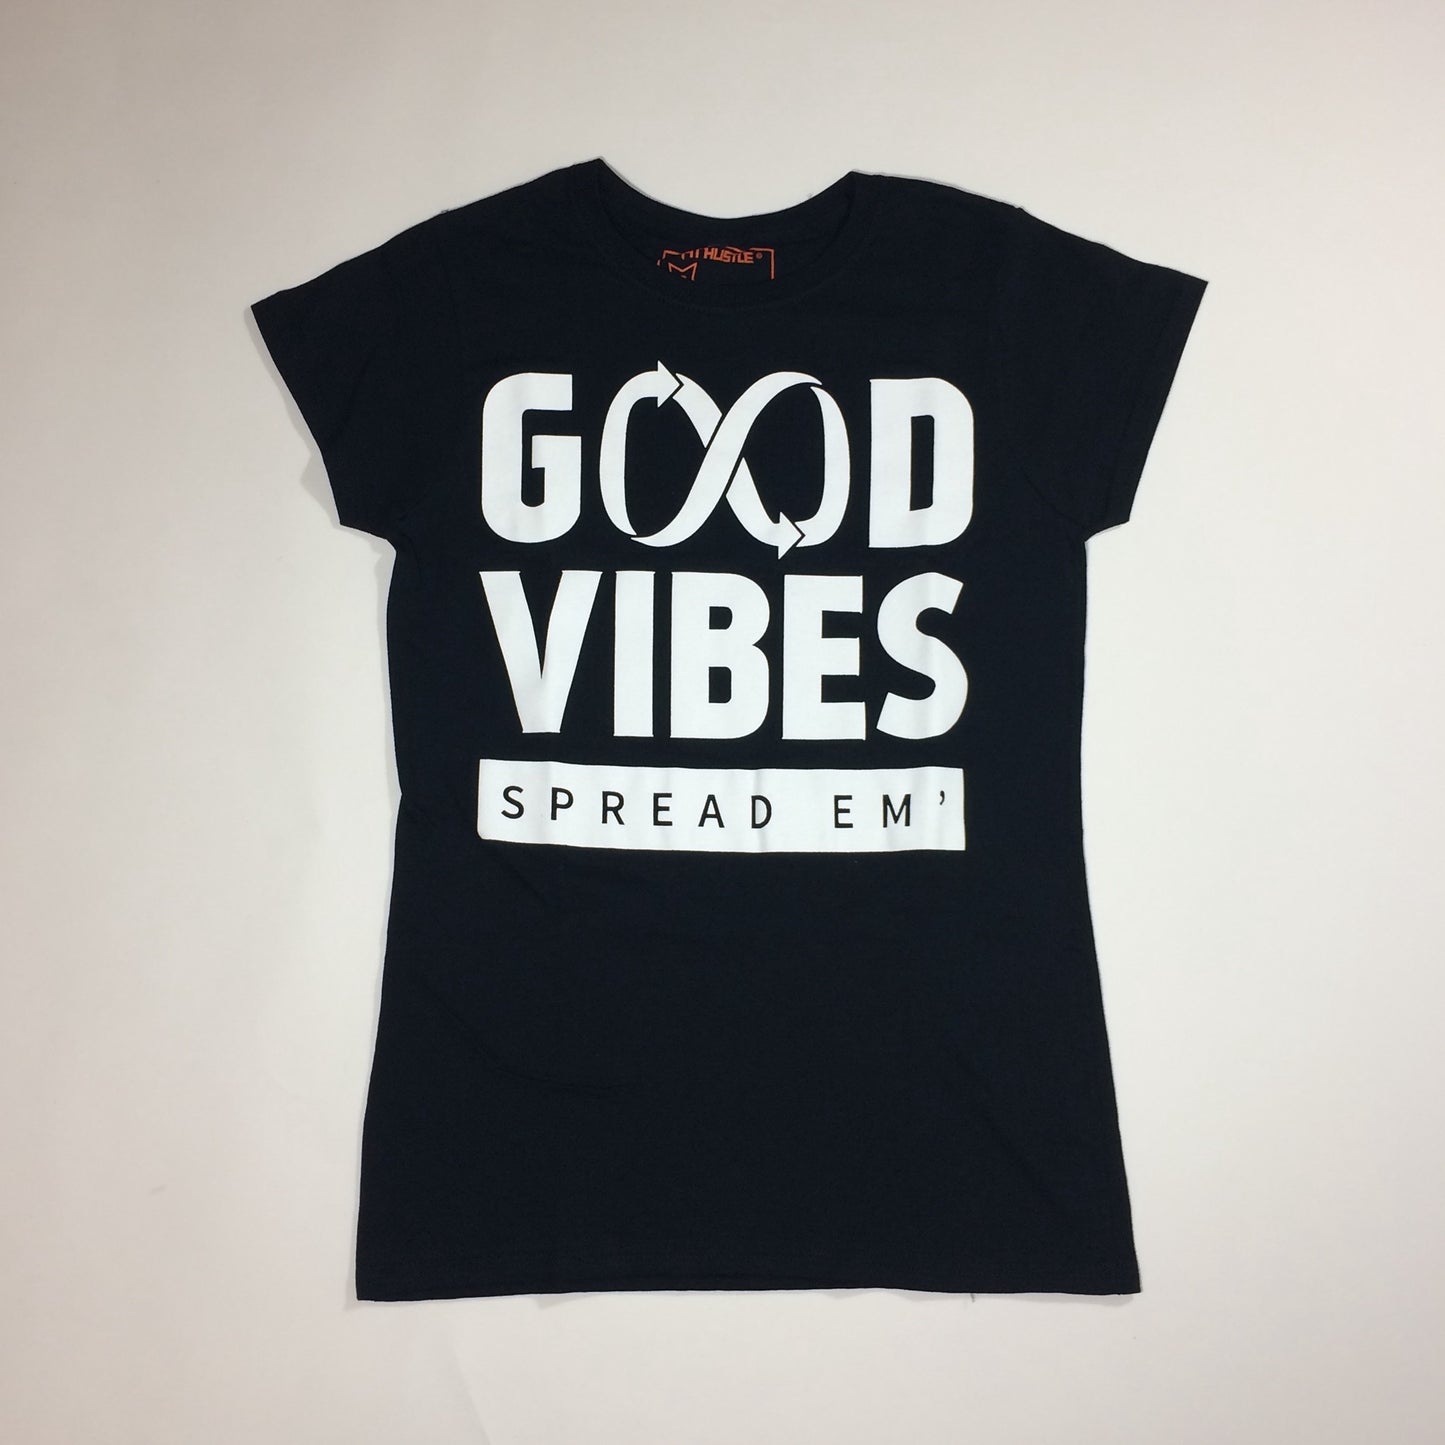 “GOOD VIBES - SPREAD EM” Women's Black T-Shirt